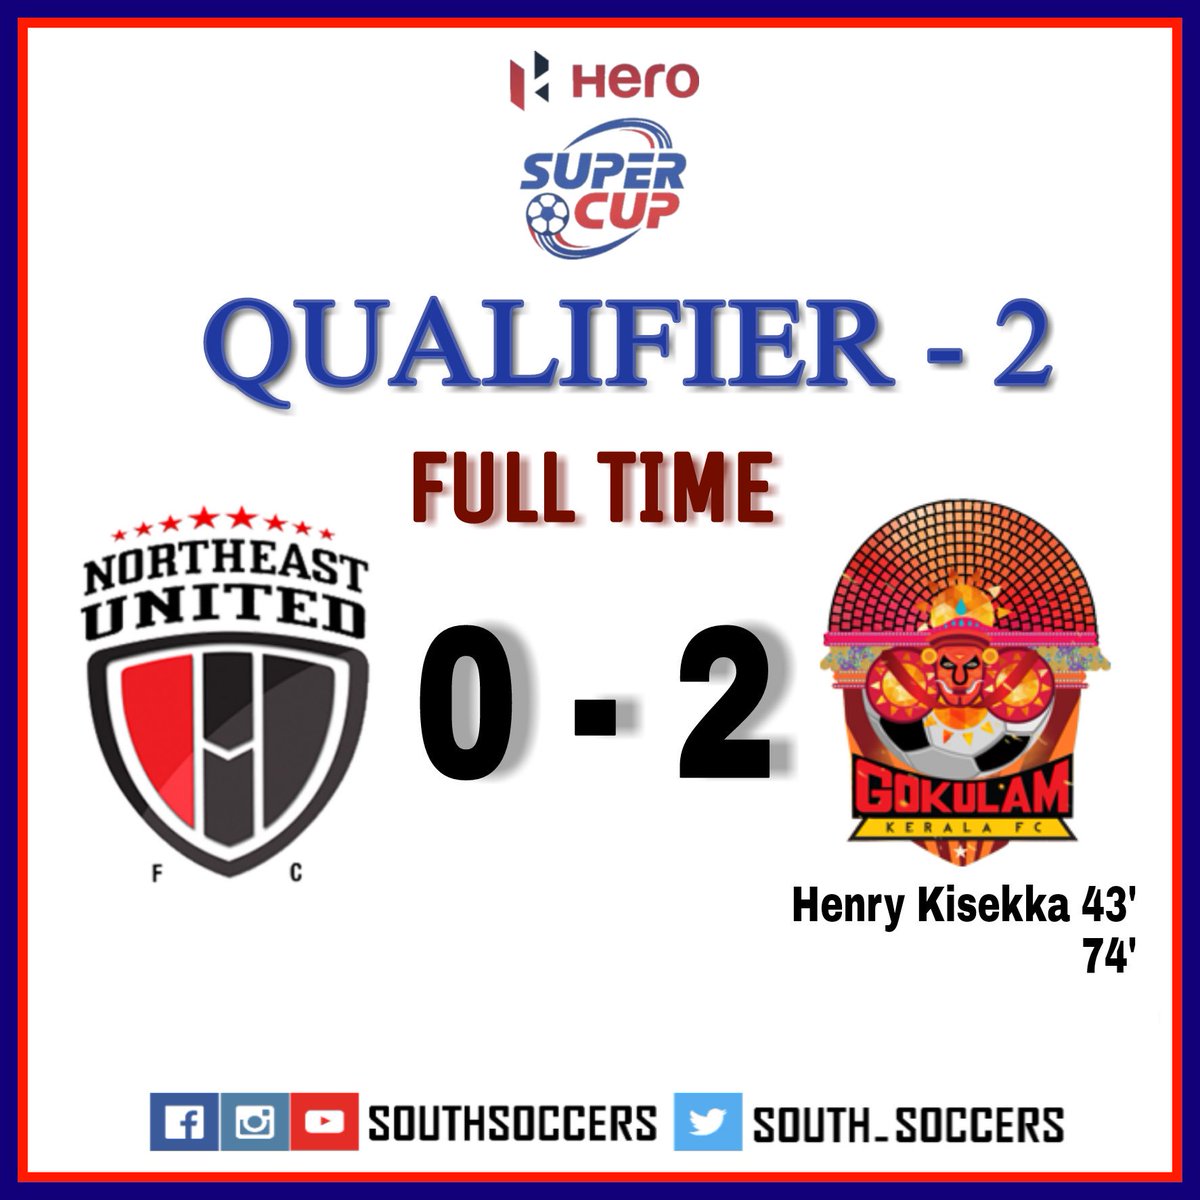 Henry Kisekka's brace leads Gokulam Kerala to pre-quarterfinal

#NEUFCvGKFC #HeroSuperCup